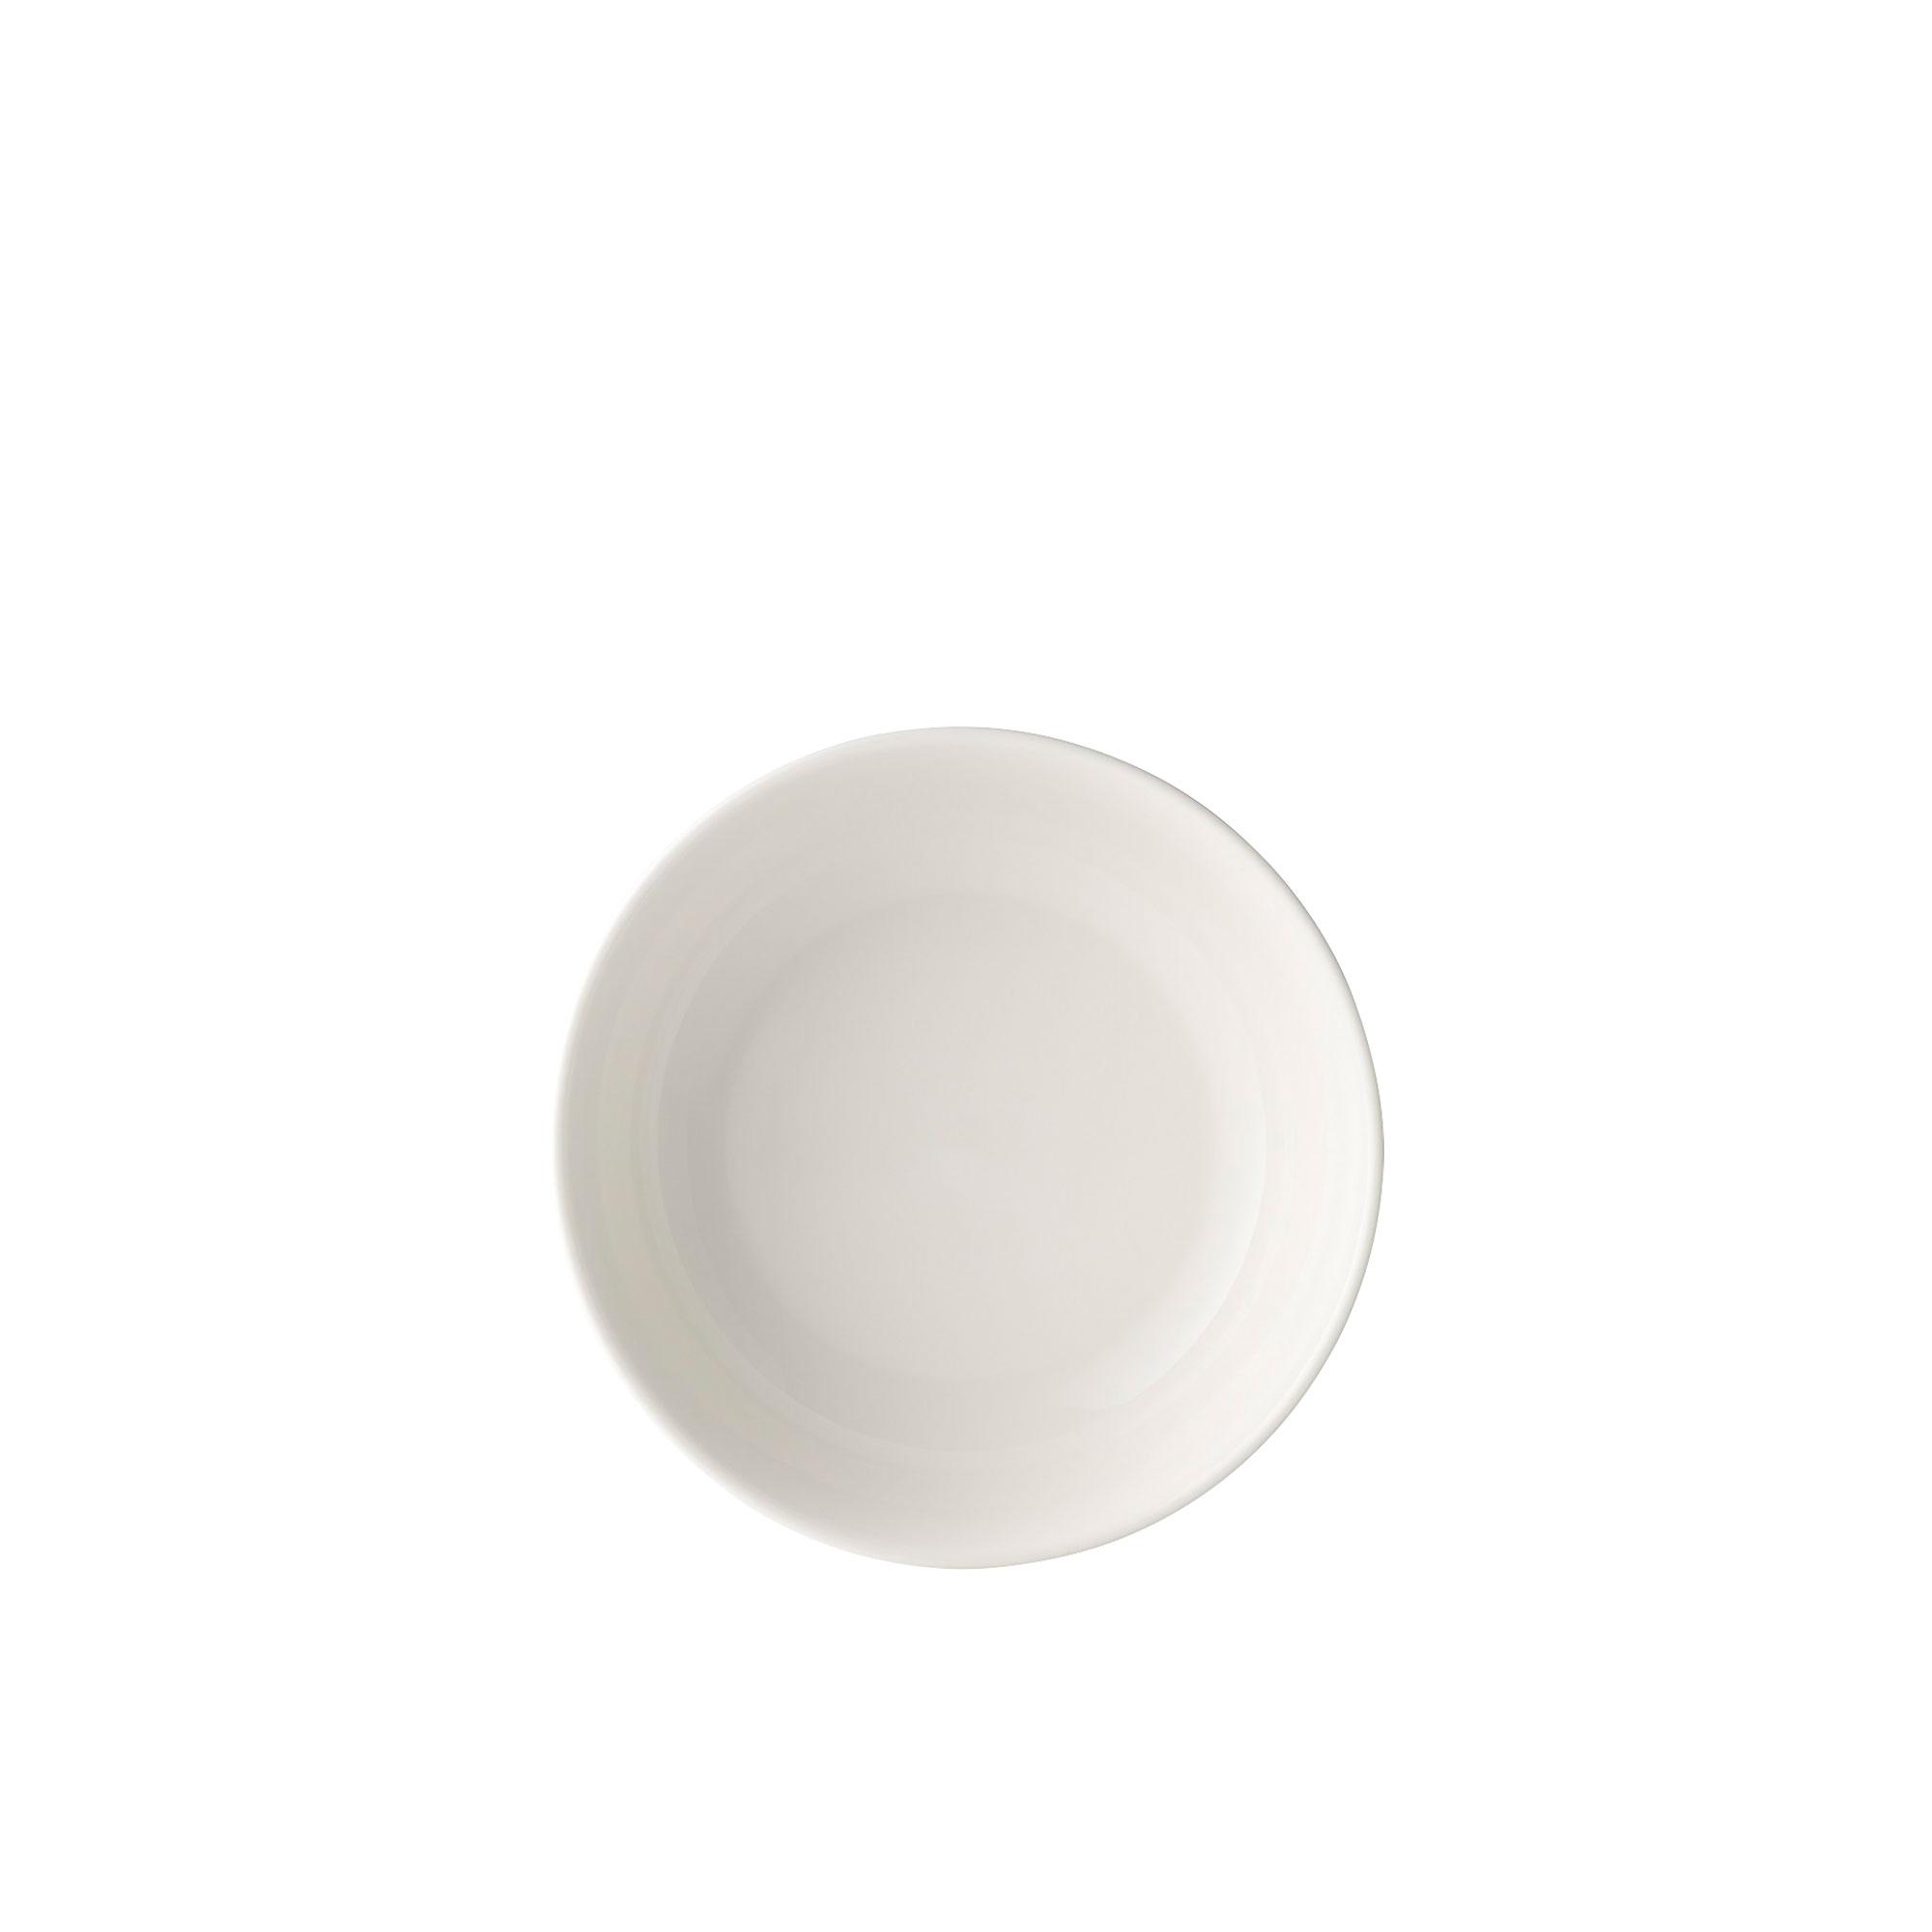 Noritake Everyday by Adam Liaw Rice Bowl Set of 4 White Image 5